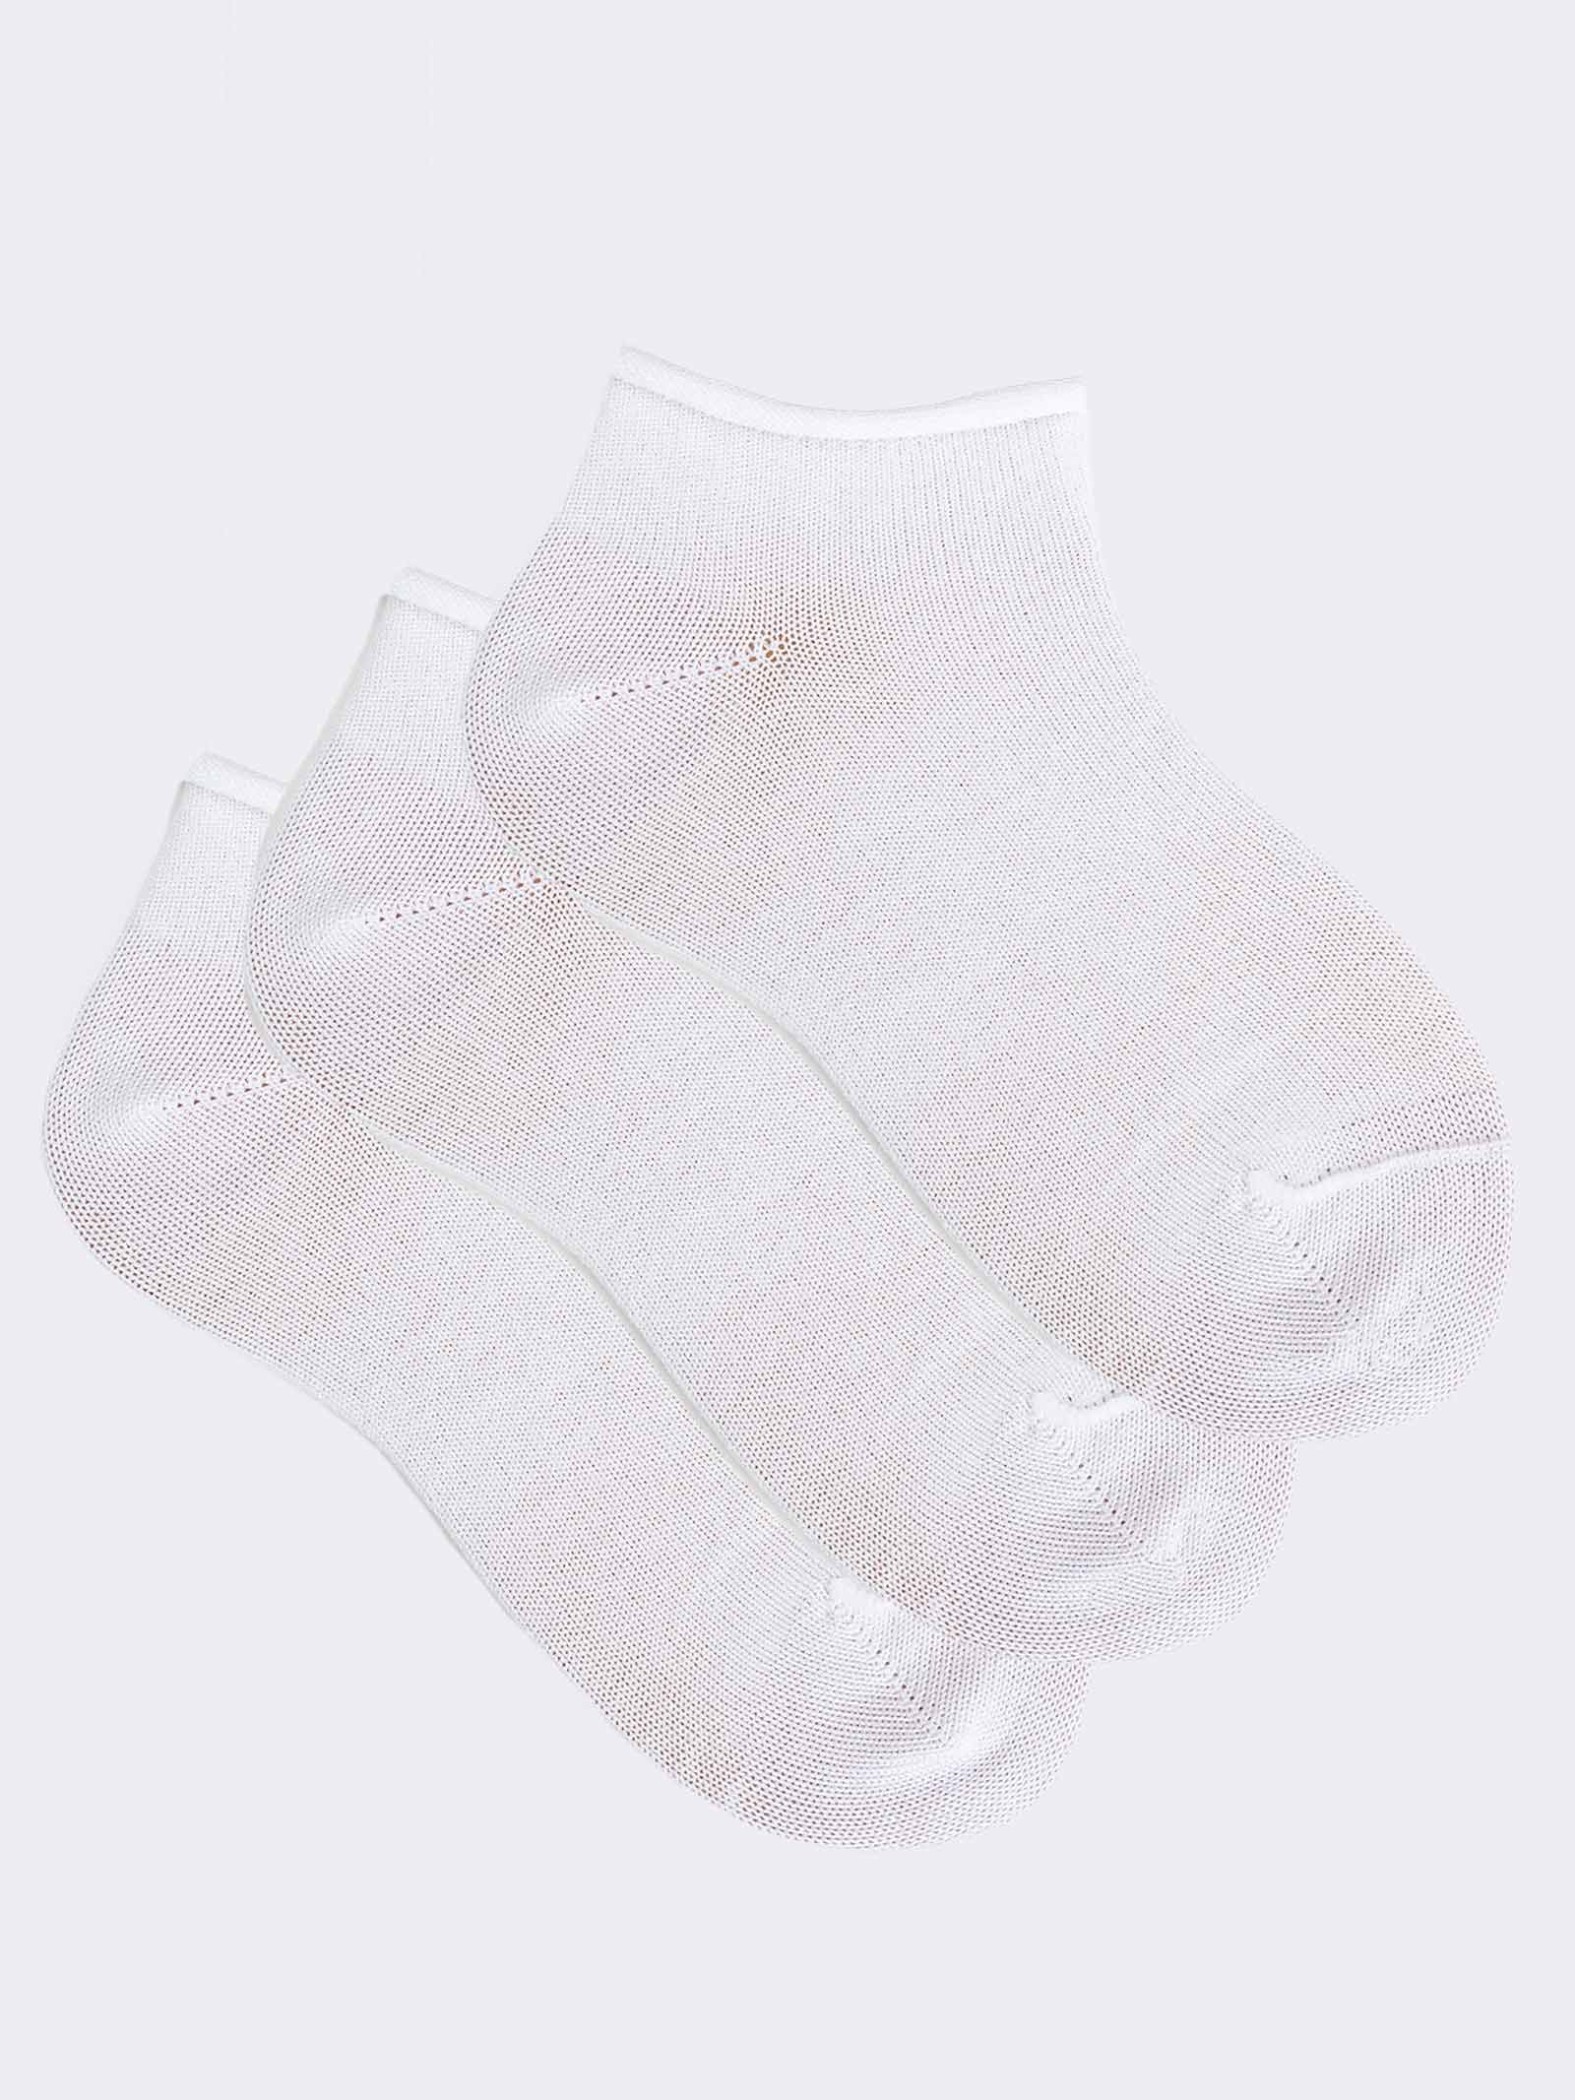 3 Pairs Newborn Baby Socks in Fresh Cotton Made in Italy - Cuff Cut - 0-3 Years